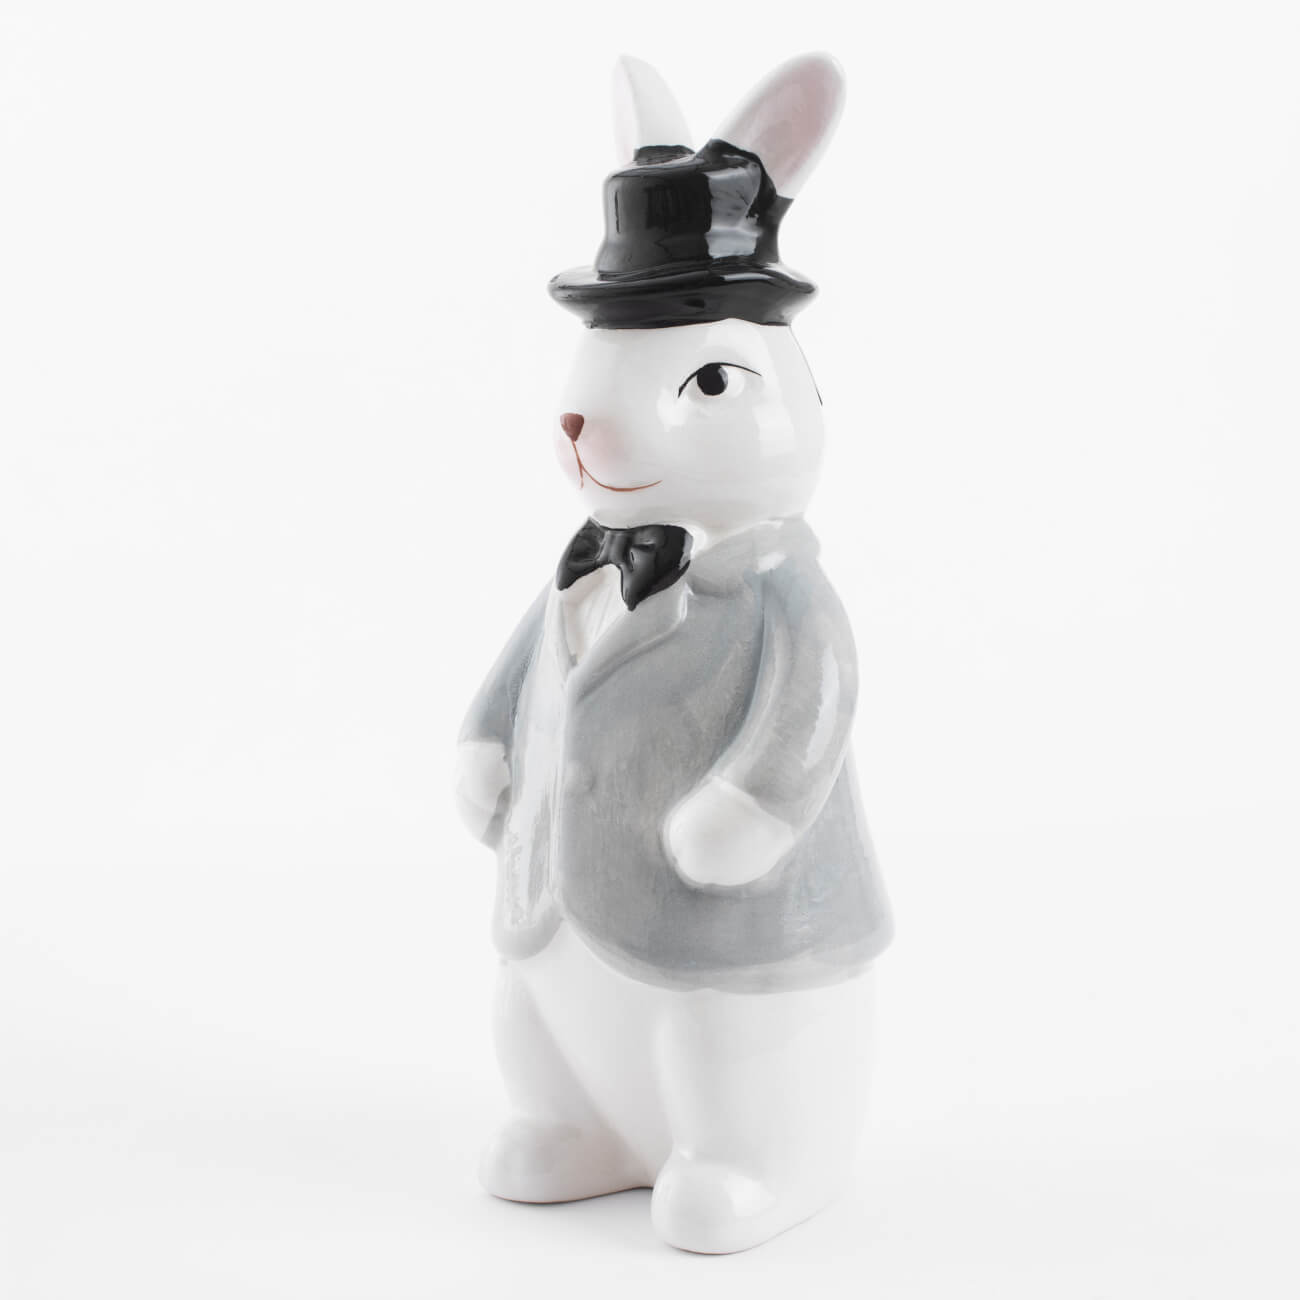 статуэтка 18 см керамика молочная кролик сидит easter blooming Статуэтка, 22 см, керамика, Кролик в костюме и шляпе, Easter blooming